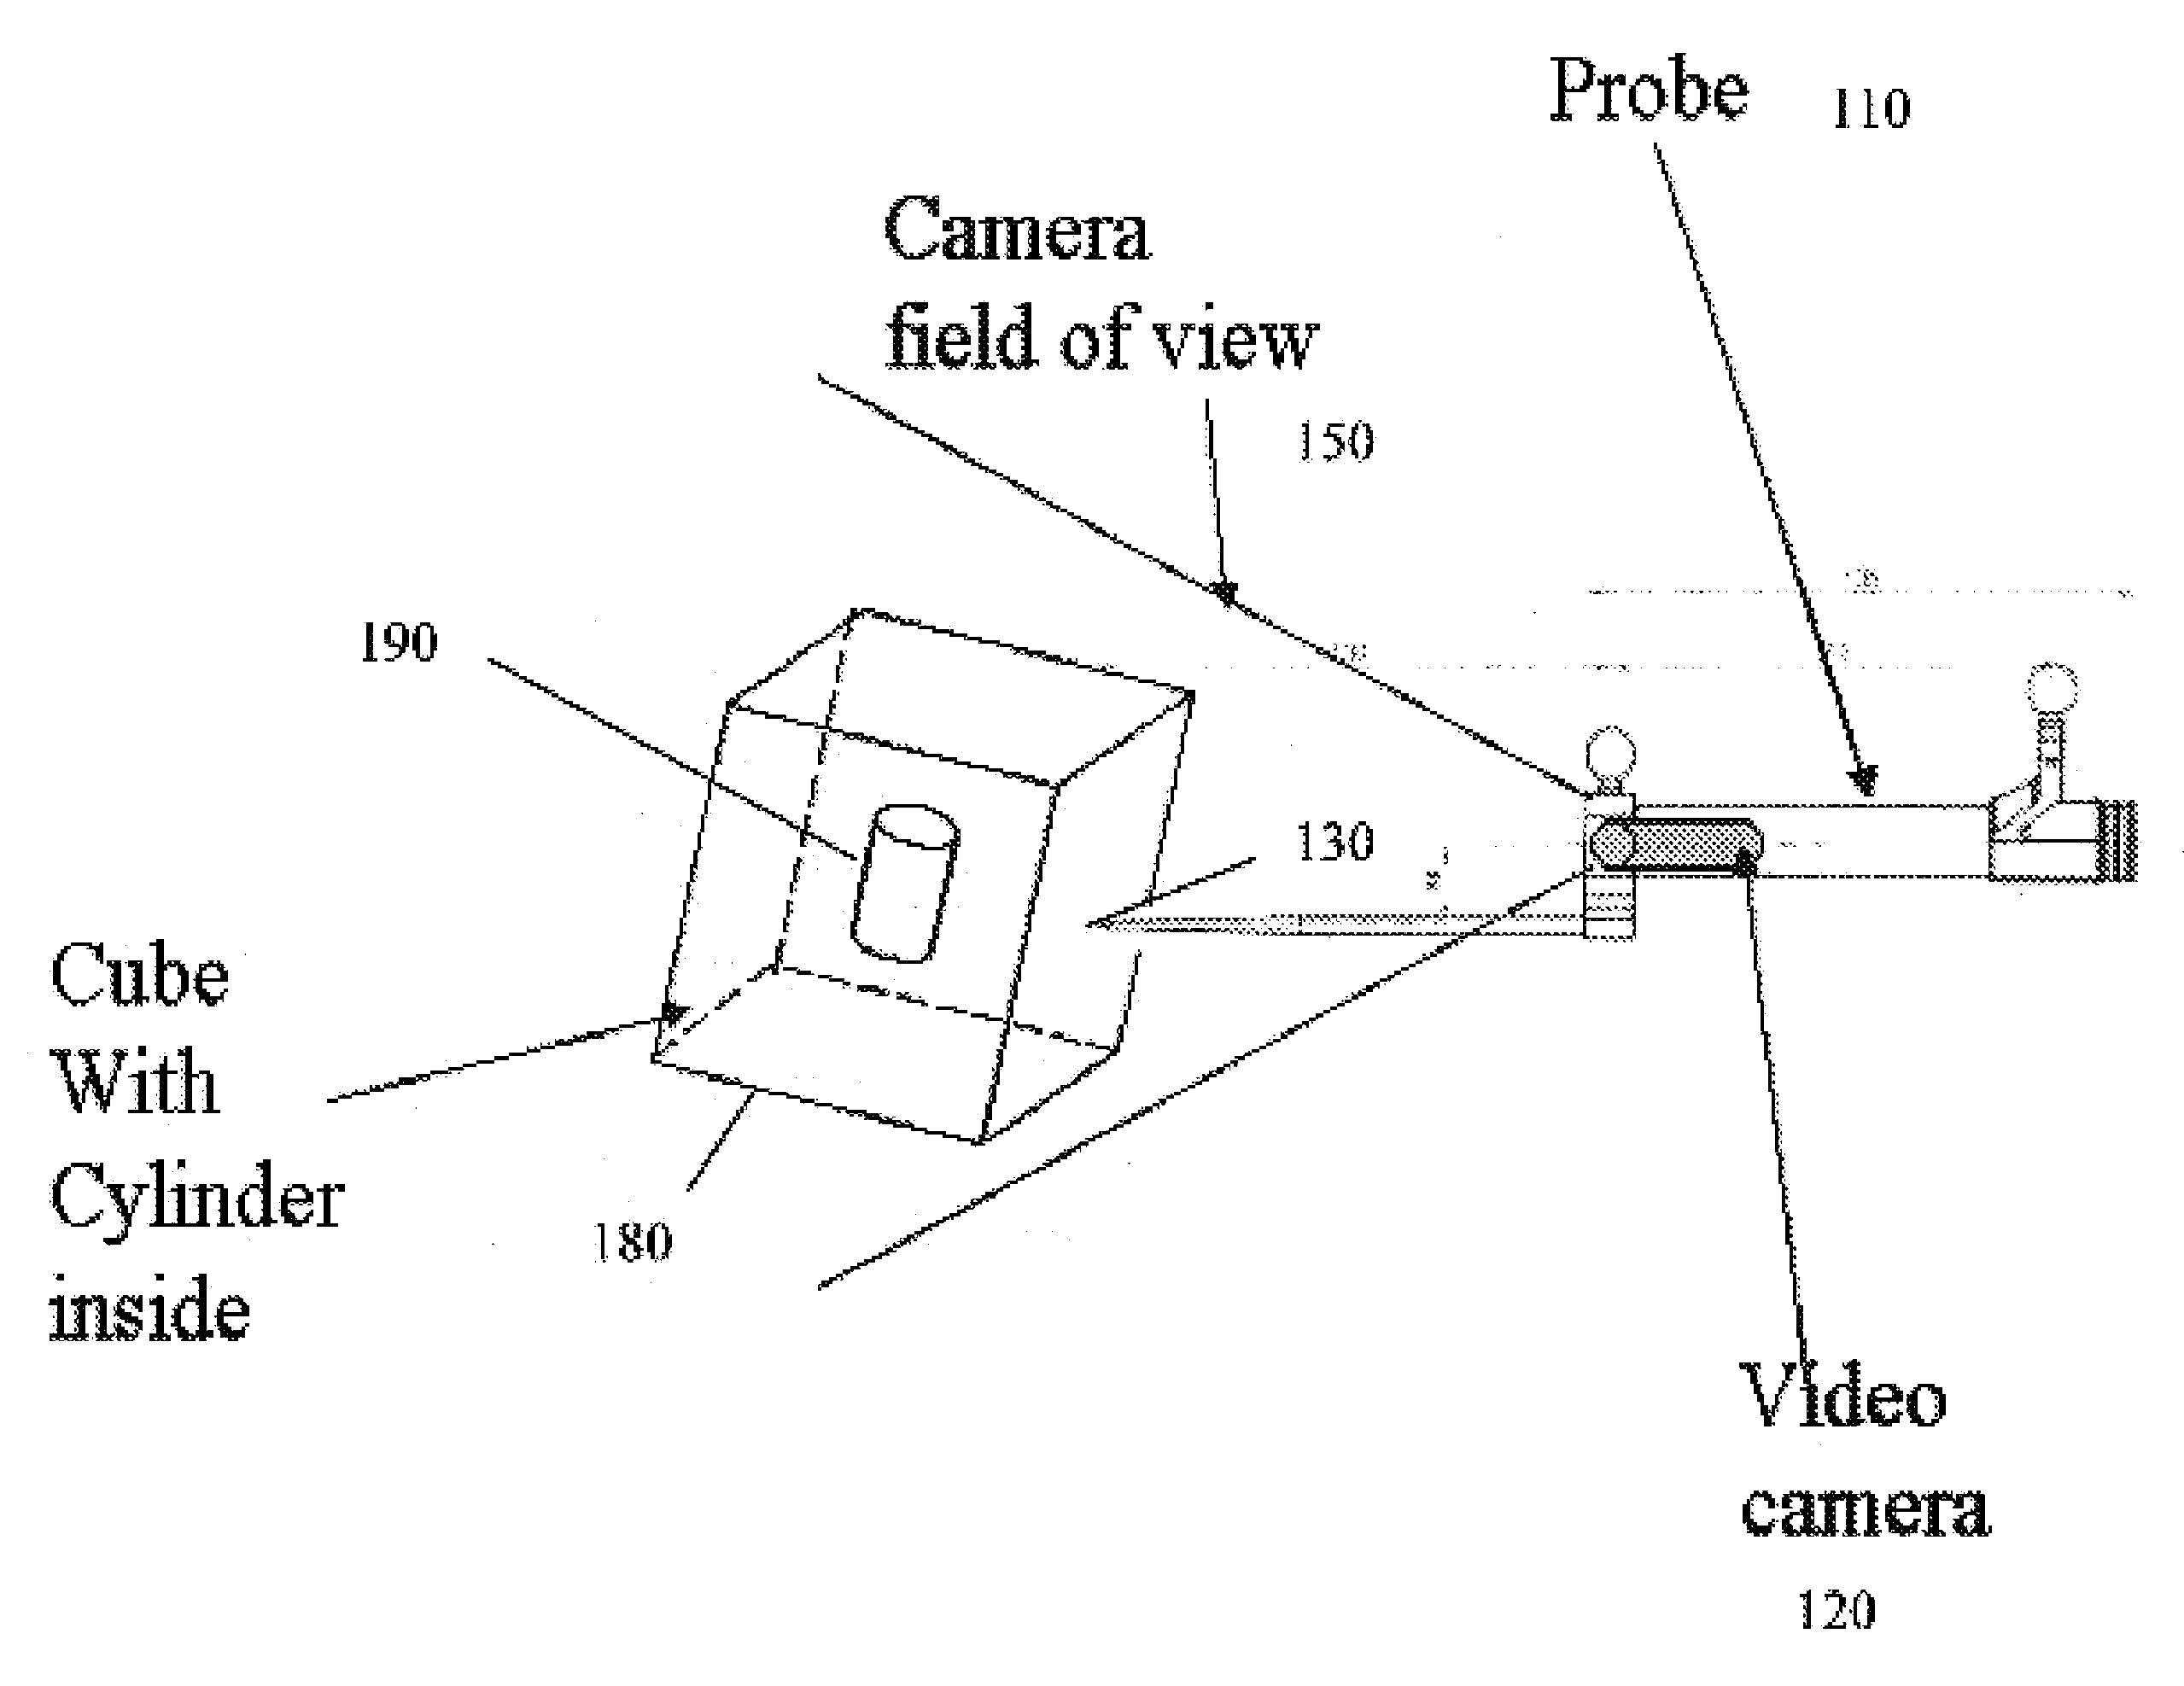 Computer enhanced surgical navigation imaging system (camera probe)